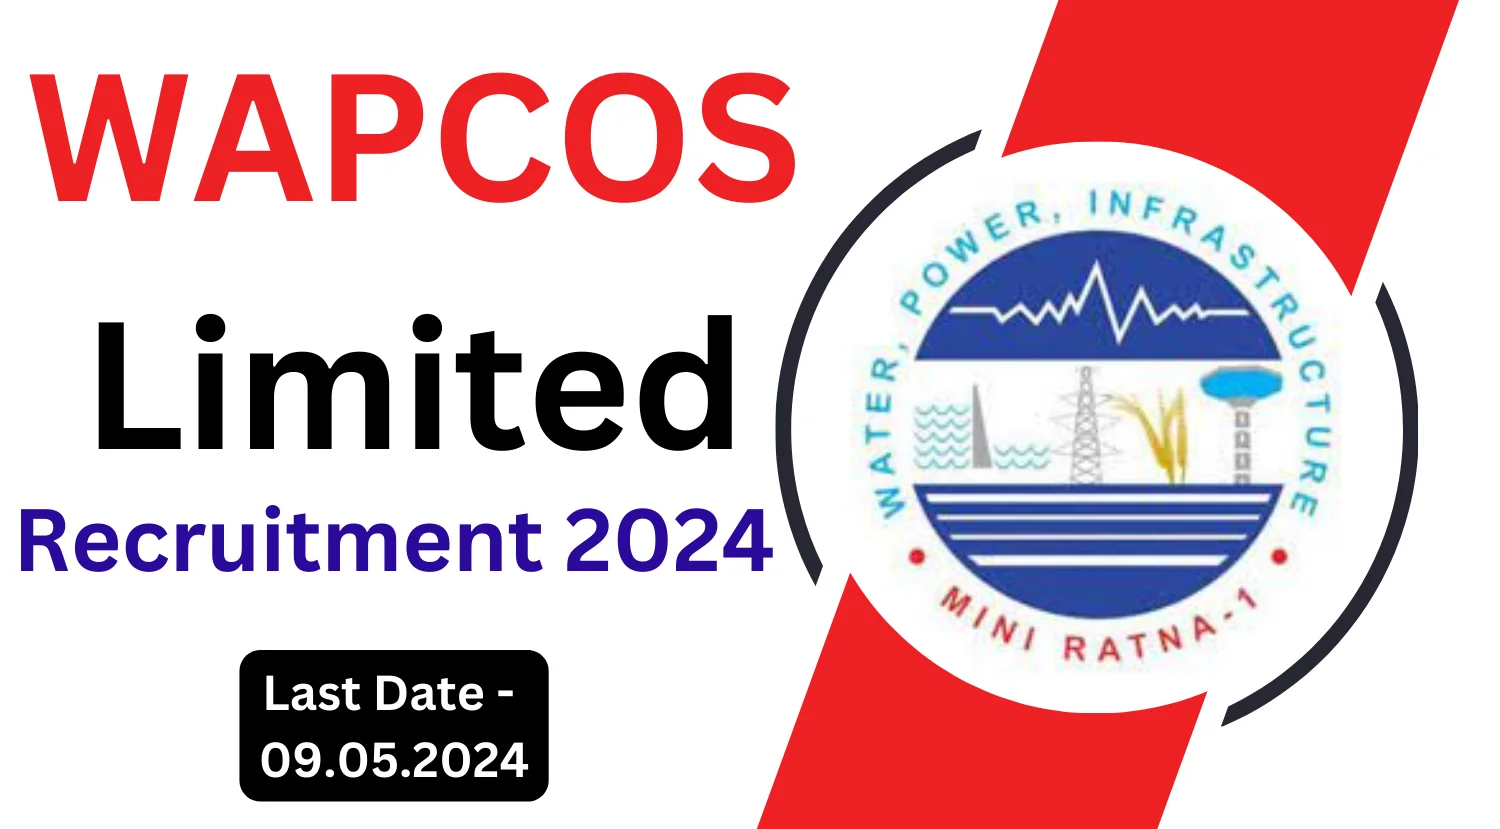 _WAPCOS Limited Recruitment 2024